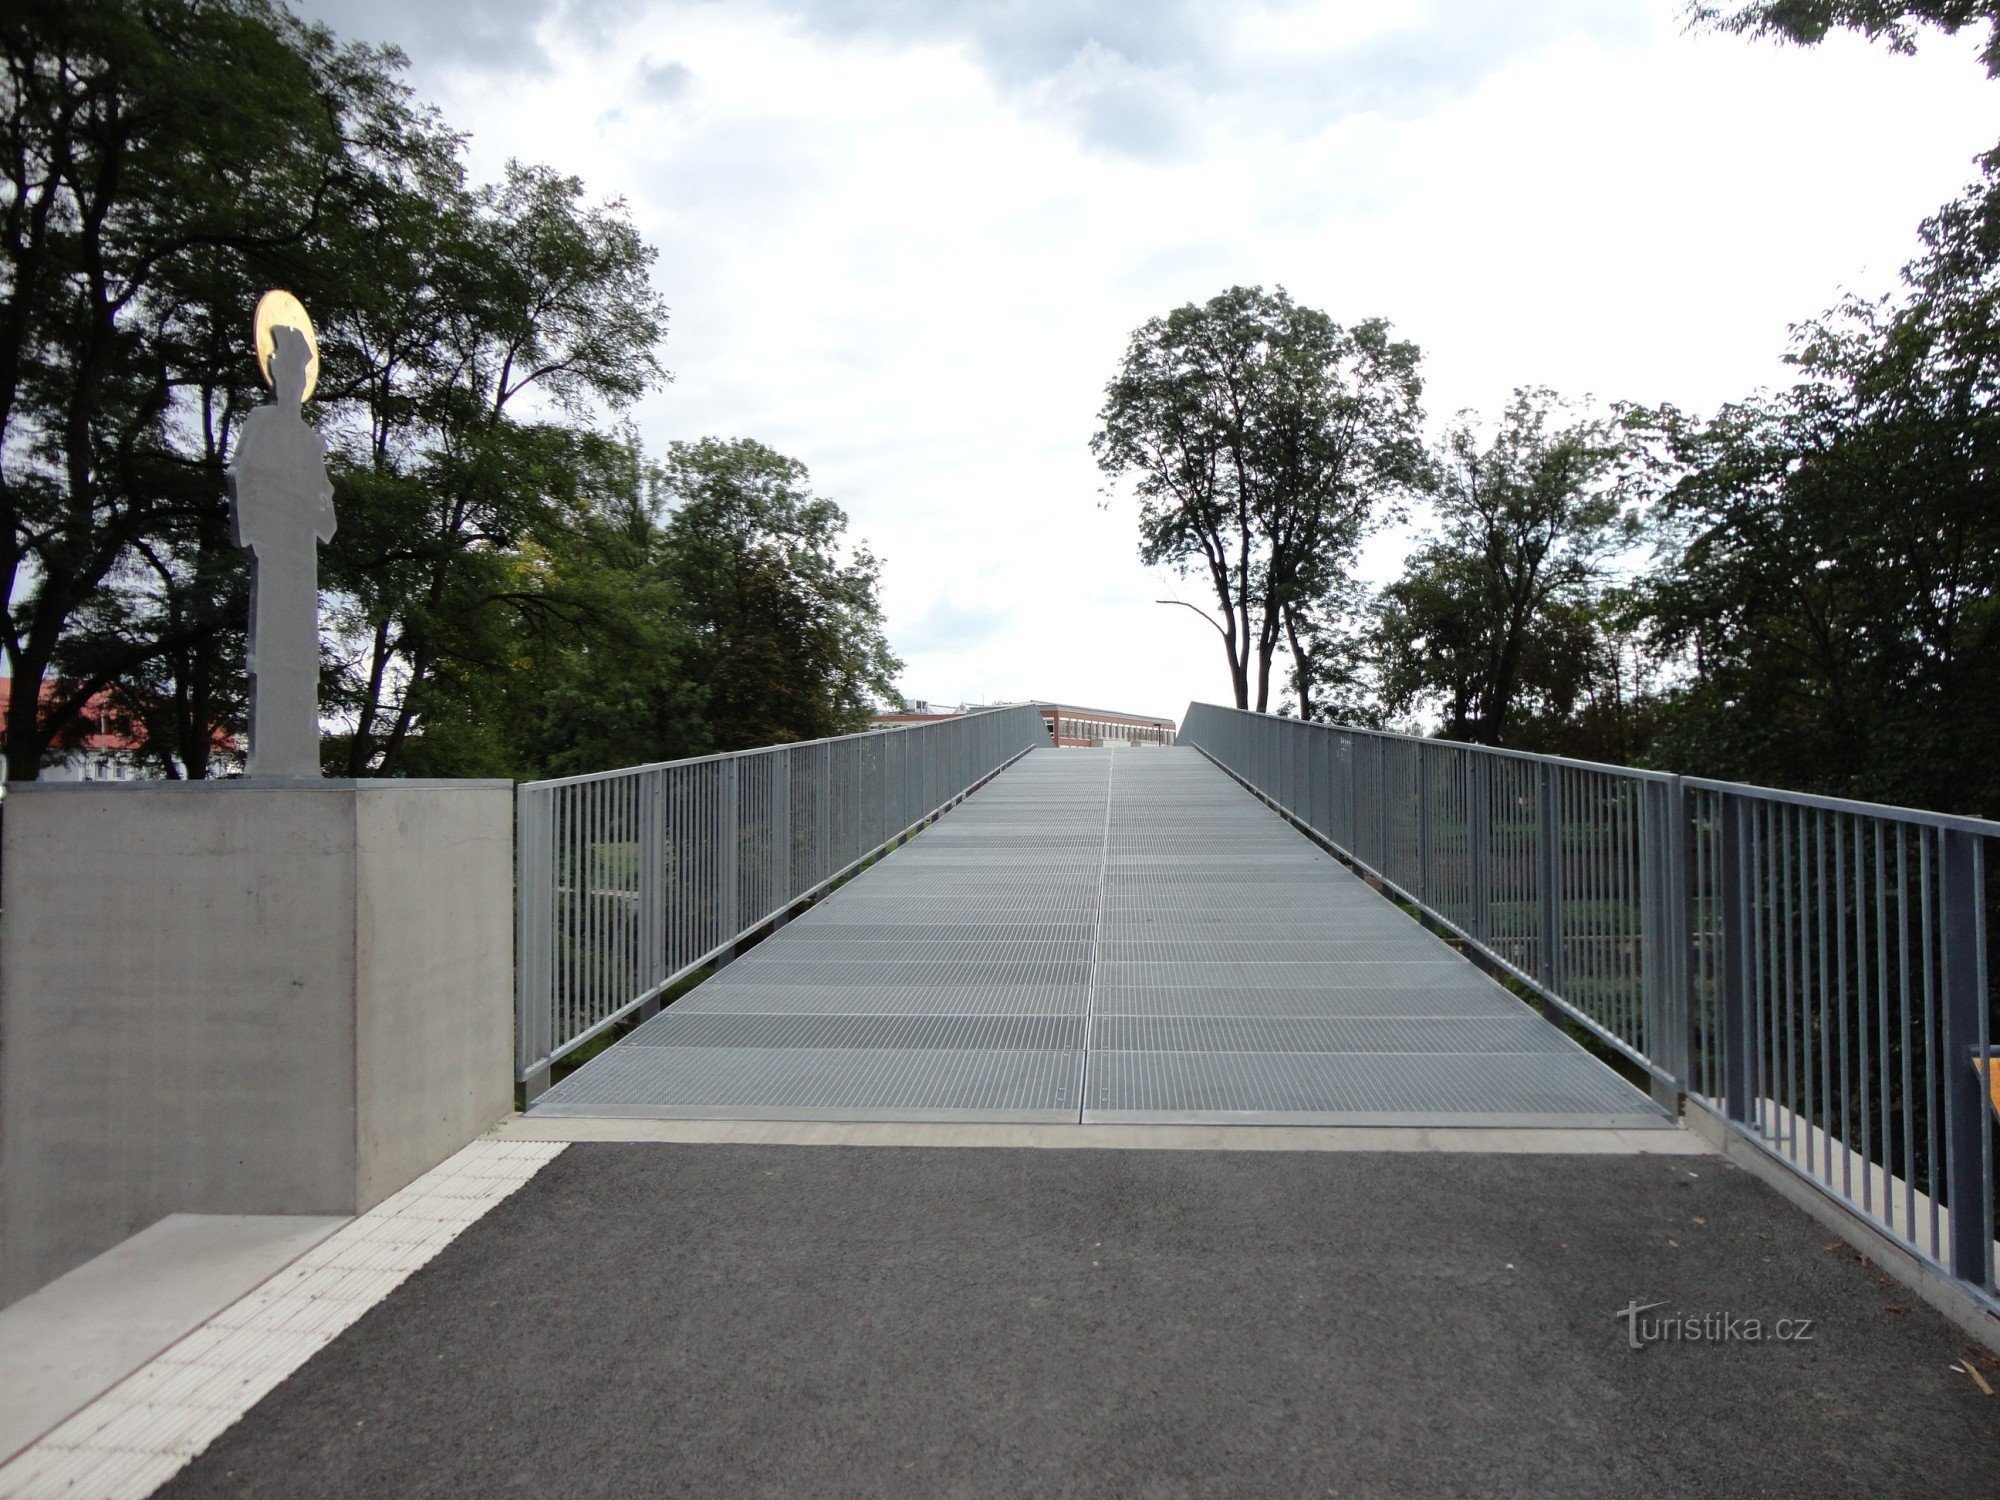 Hradec Králové - footbridge for pedestrians and cyclists over Orlica